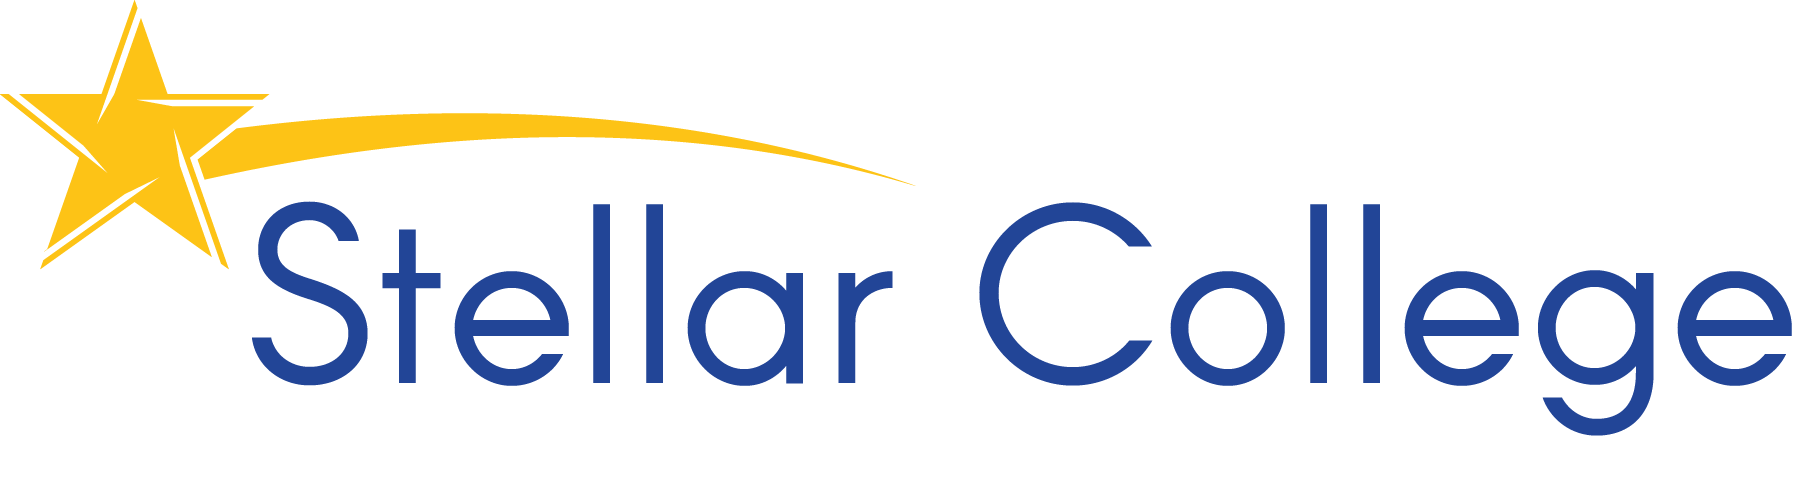 Stellar College Pty Ltd